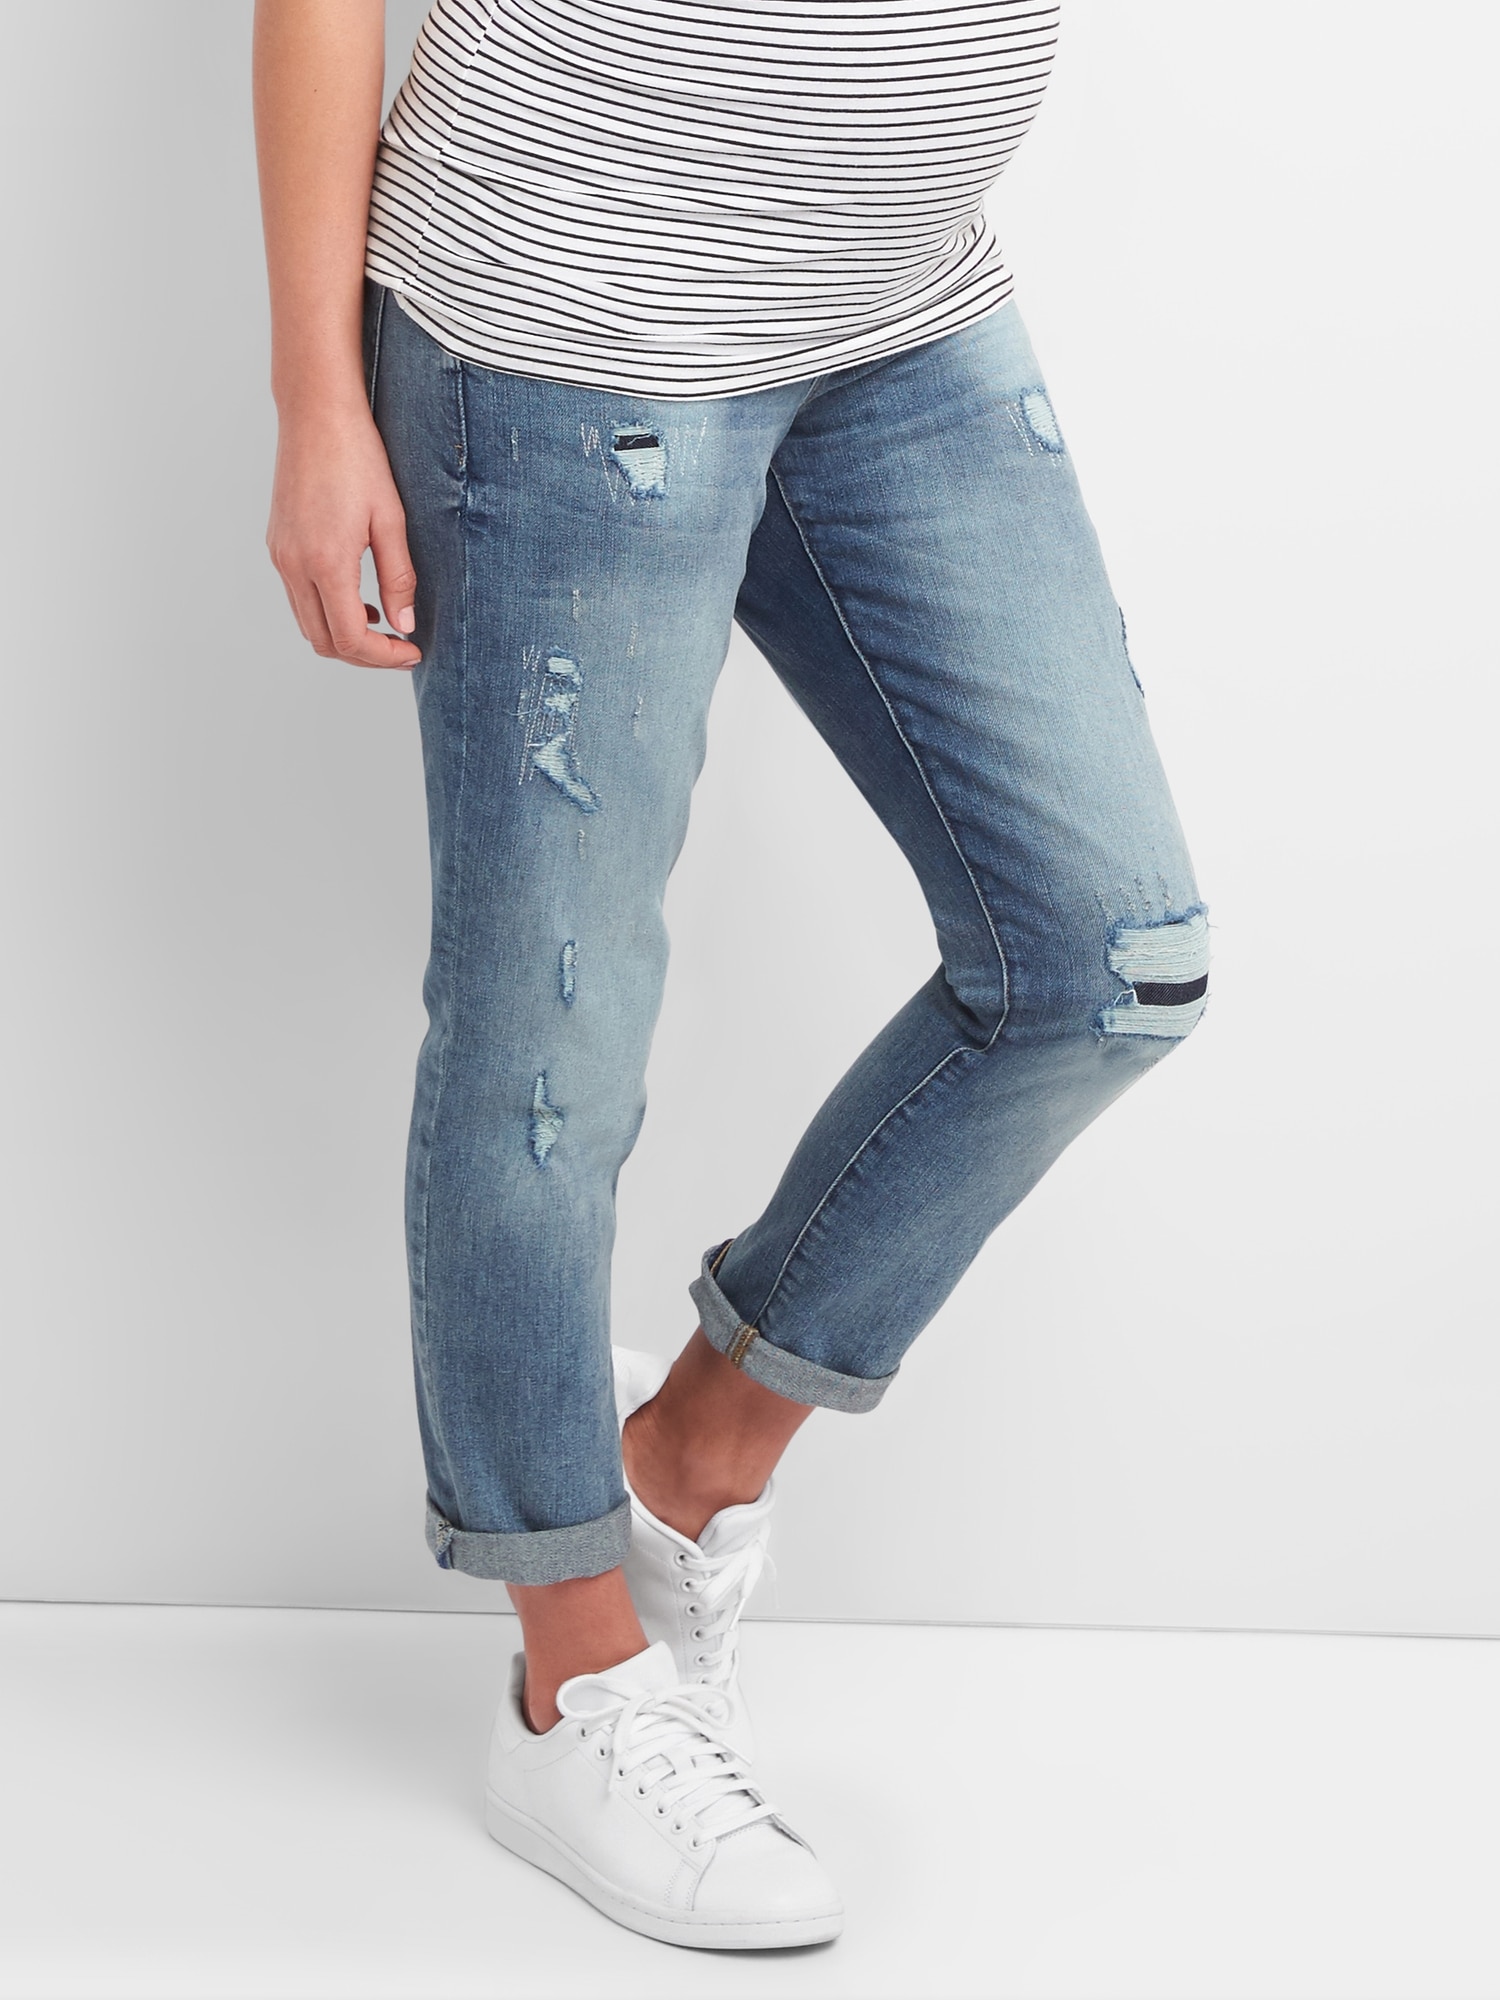 paige transcend hoxton ultra skinny jeans